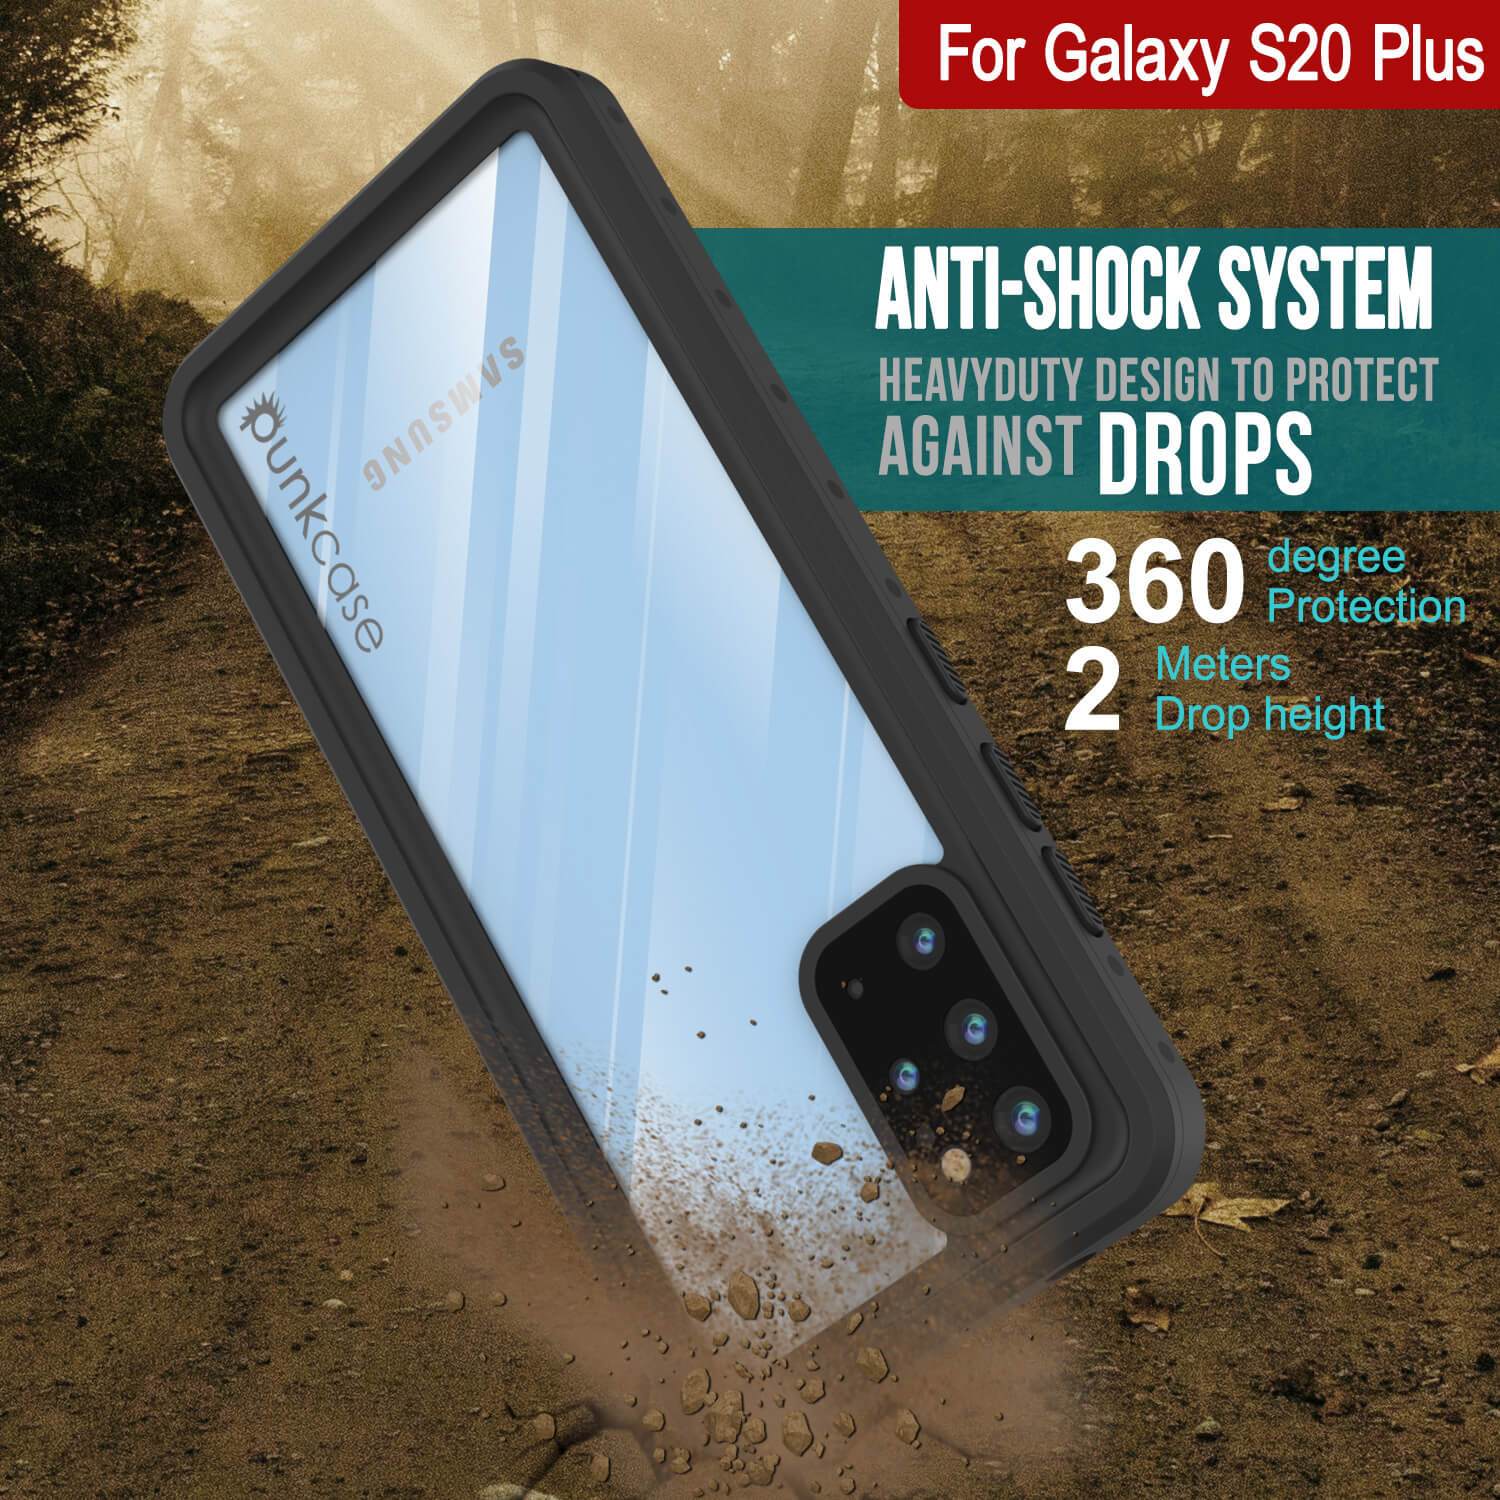 Galaxy S20+ Plus Waterproof Case PunkCase StudStar Clear Thin 6.6ft Underwater IP68 Shock/Snow Proof